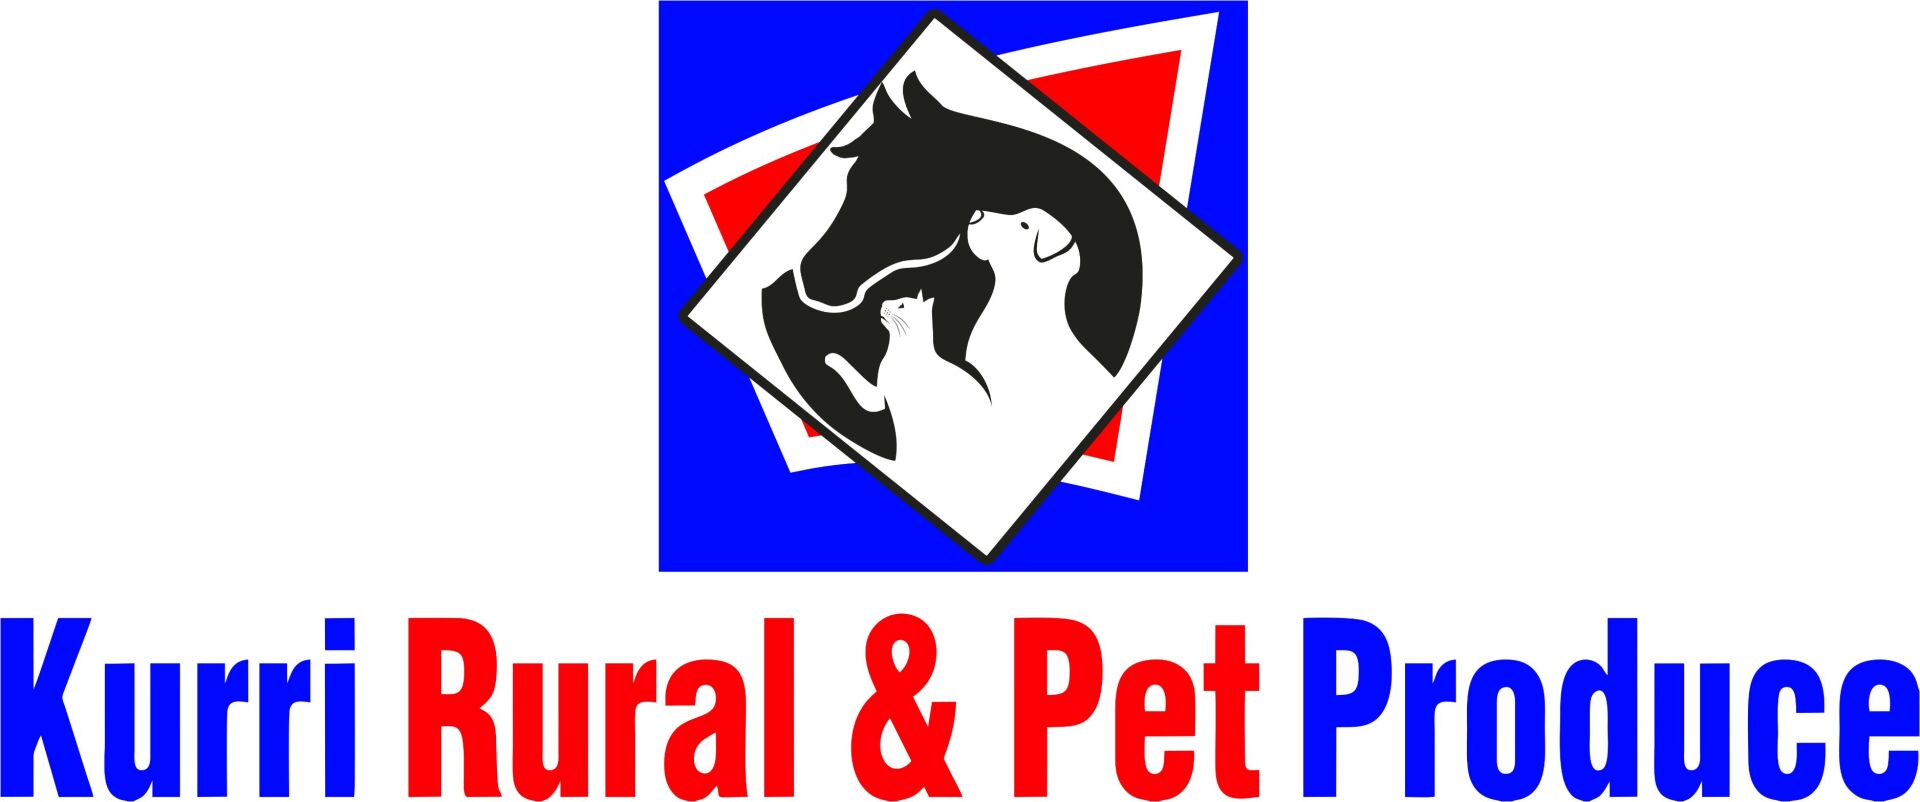 Kurri Rural & Pet Produce: Farming & Animal Supplies in the Hunter Valley